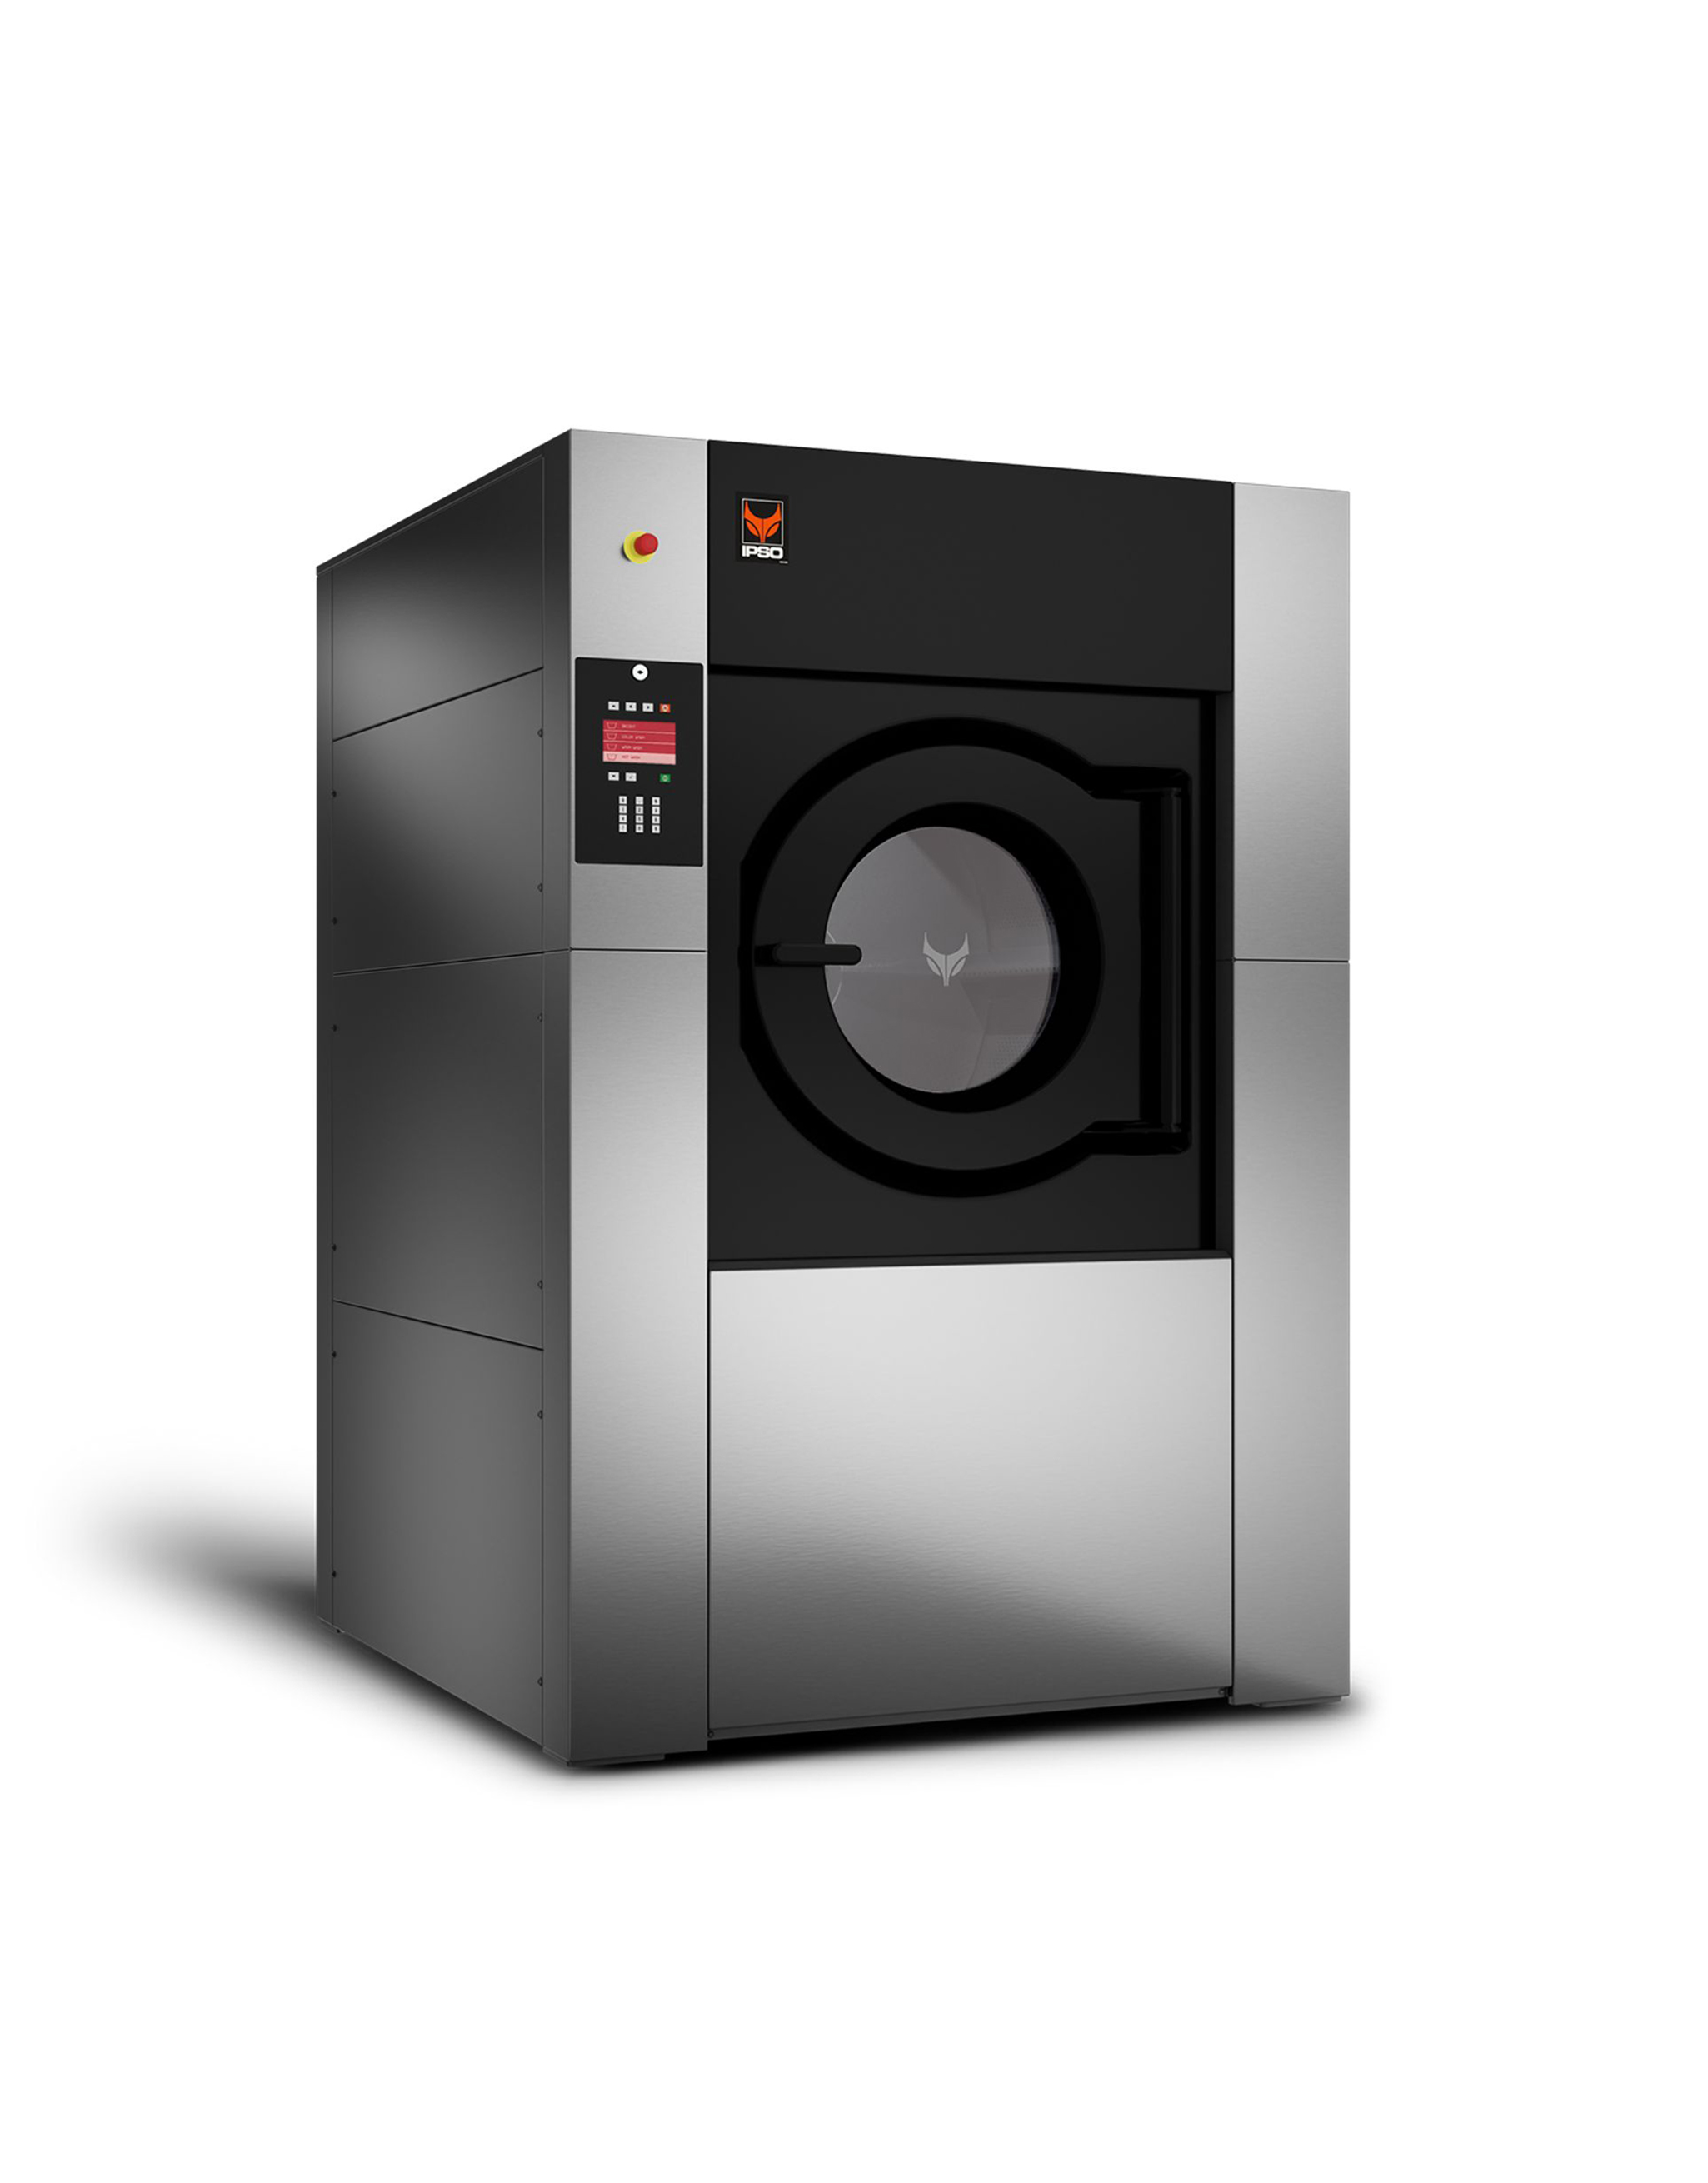 IY350-links-industriele-wasmachine-machine-à-laver-industriel-350-kilo-kg-industrial